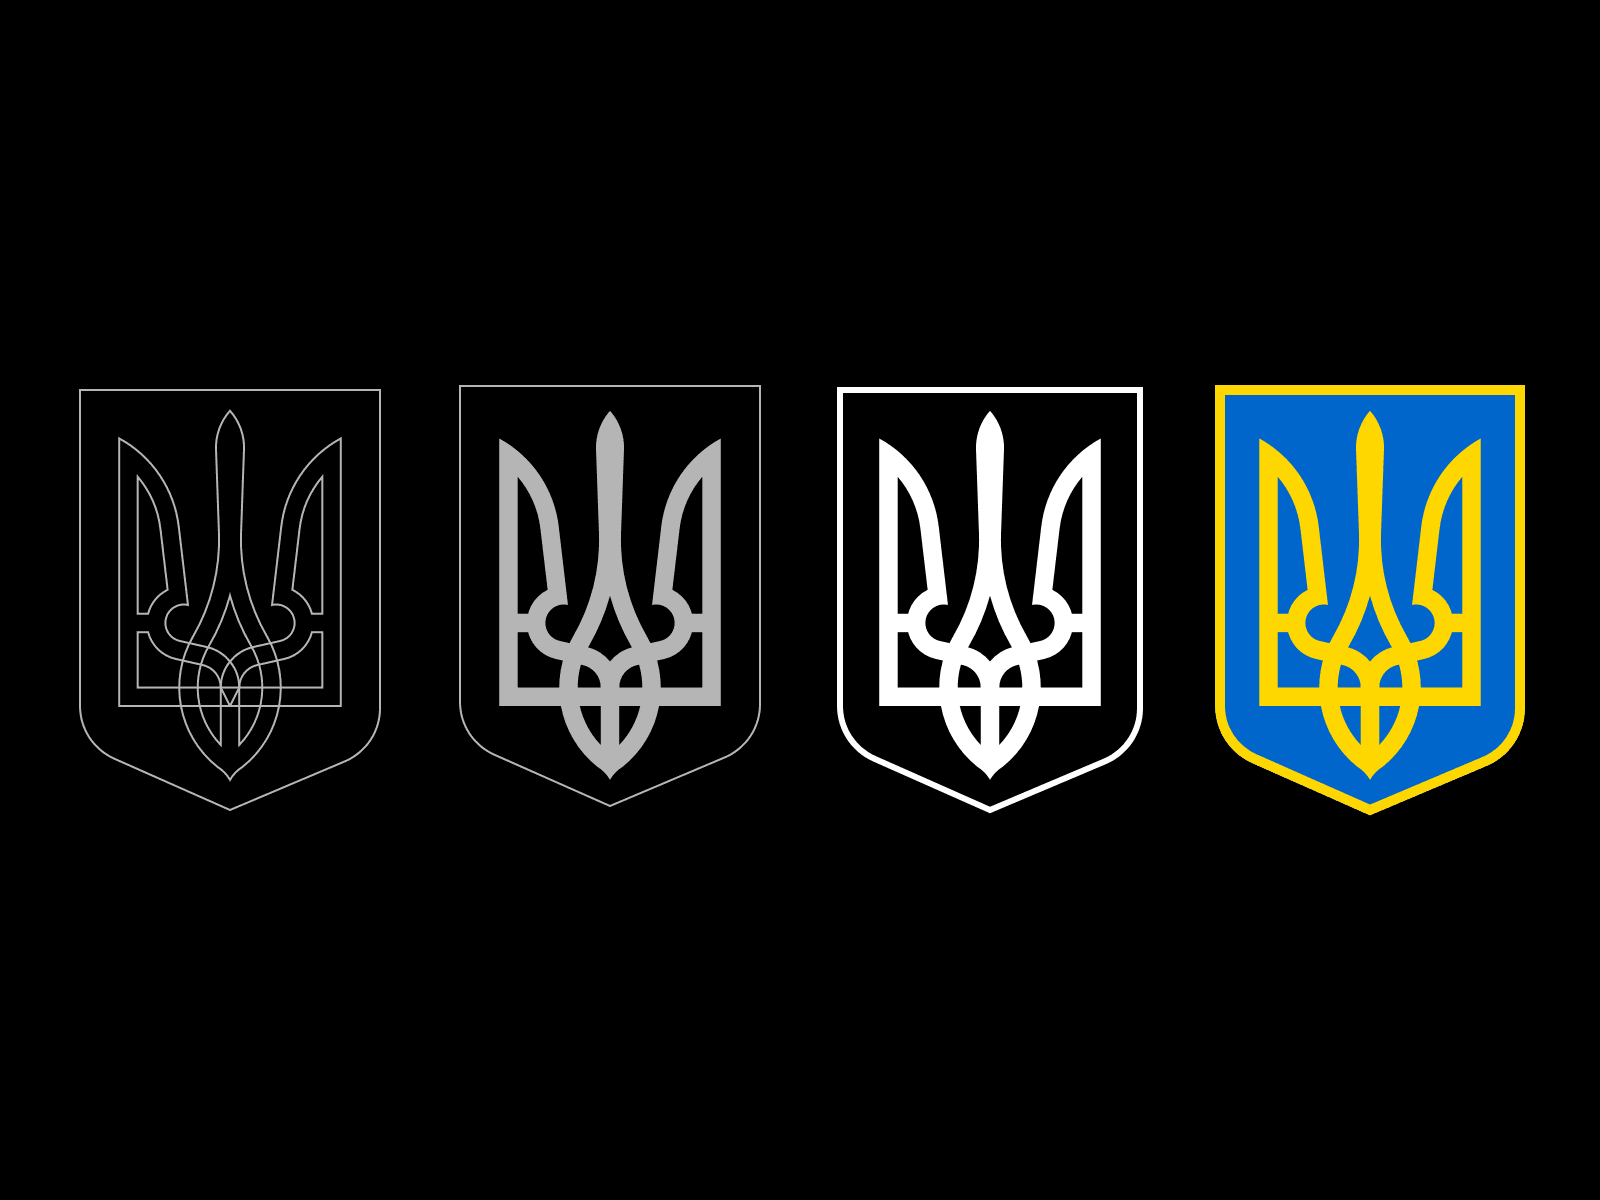 ukraine-coat-of-arms-shield-logo-vector.png